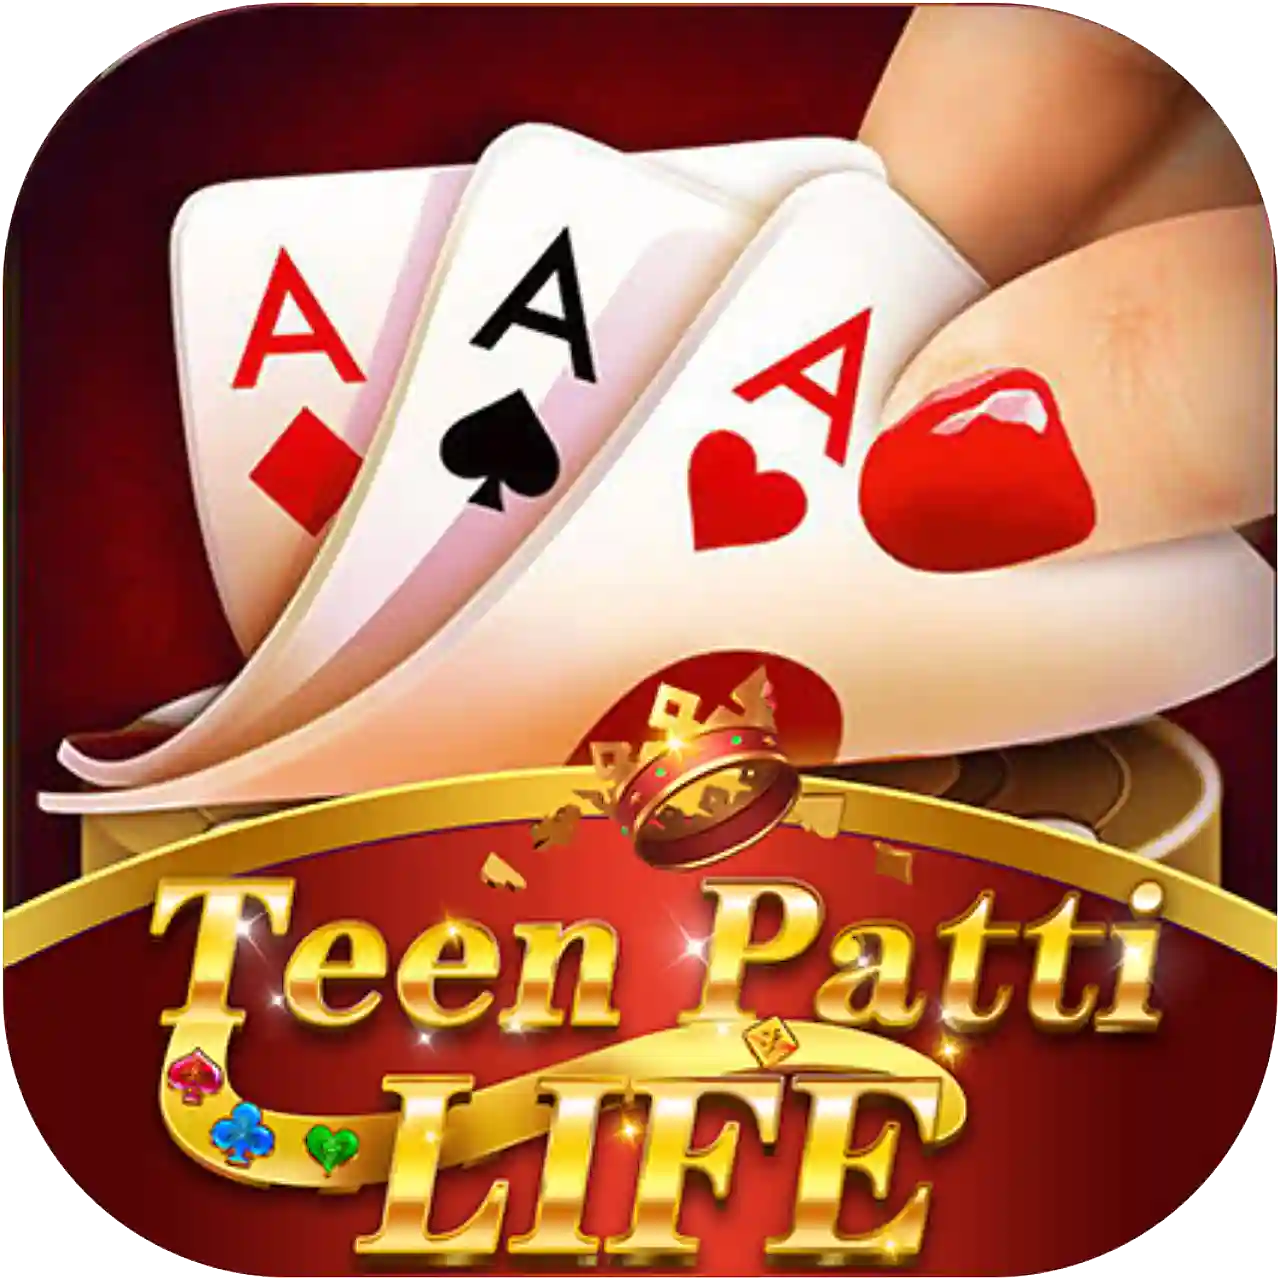 Teen Patti Life - All Rummy Apps List ₹51 Bonus